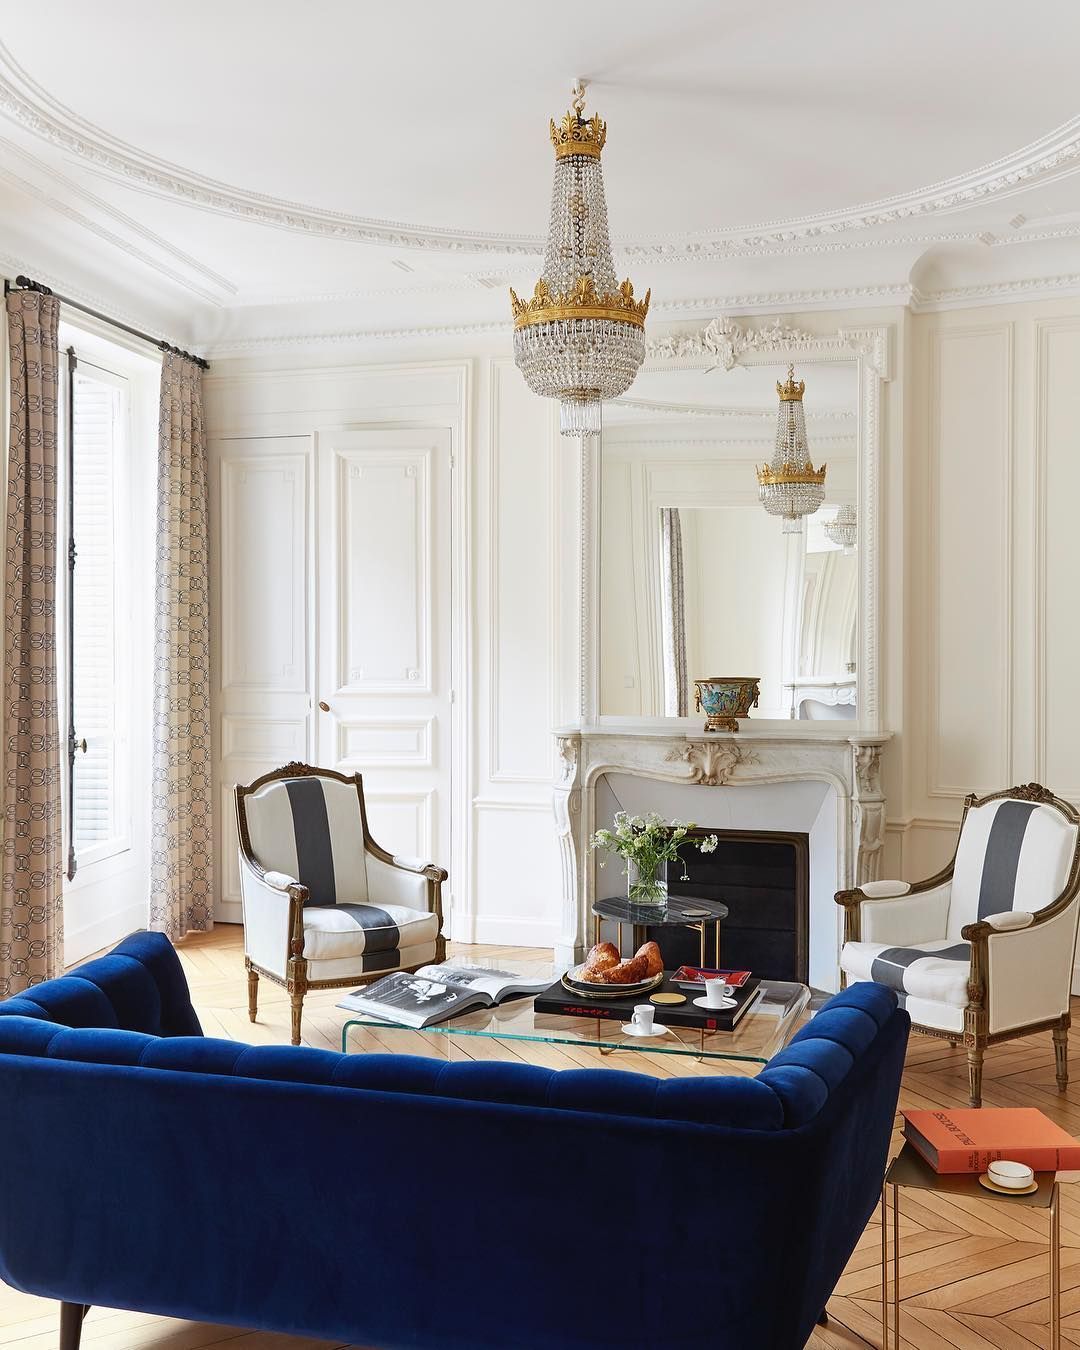 Parisian living room with blue velvet sofa and crystal chandelier via @abkasha